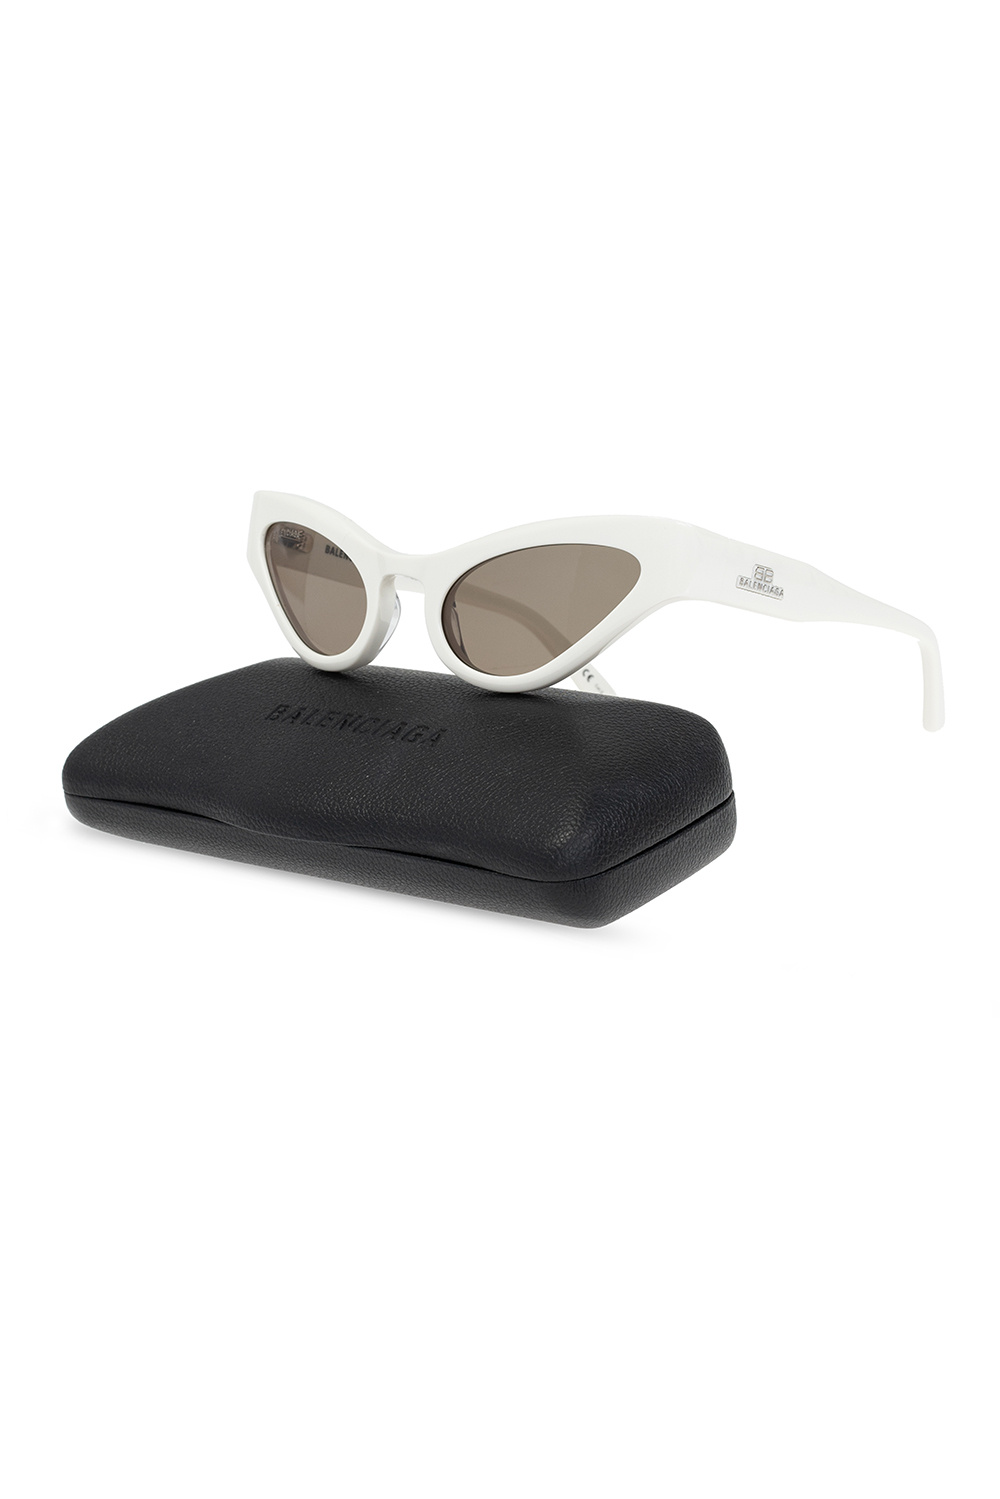 Balenciaga sunglasses SK0041S 003